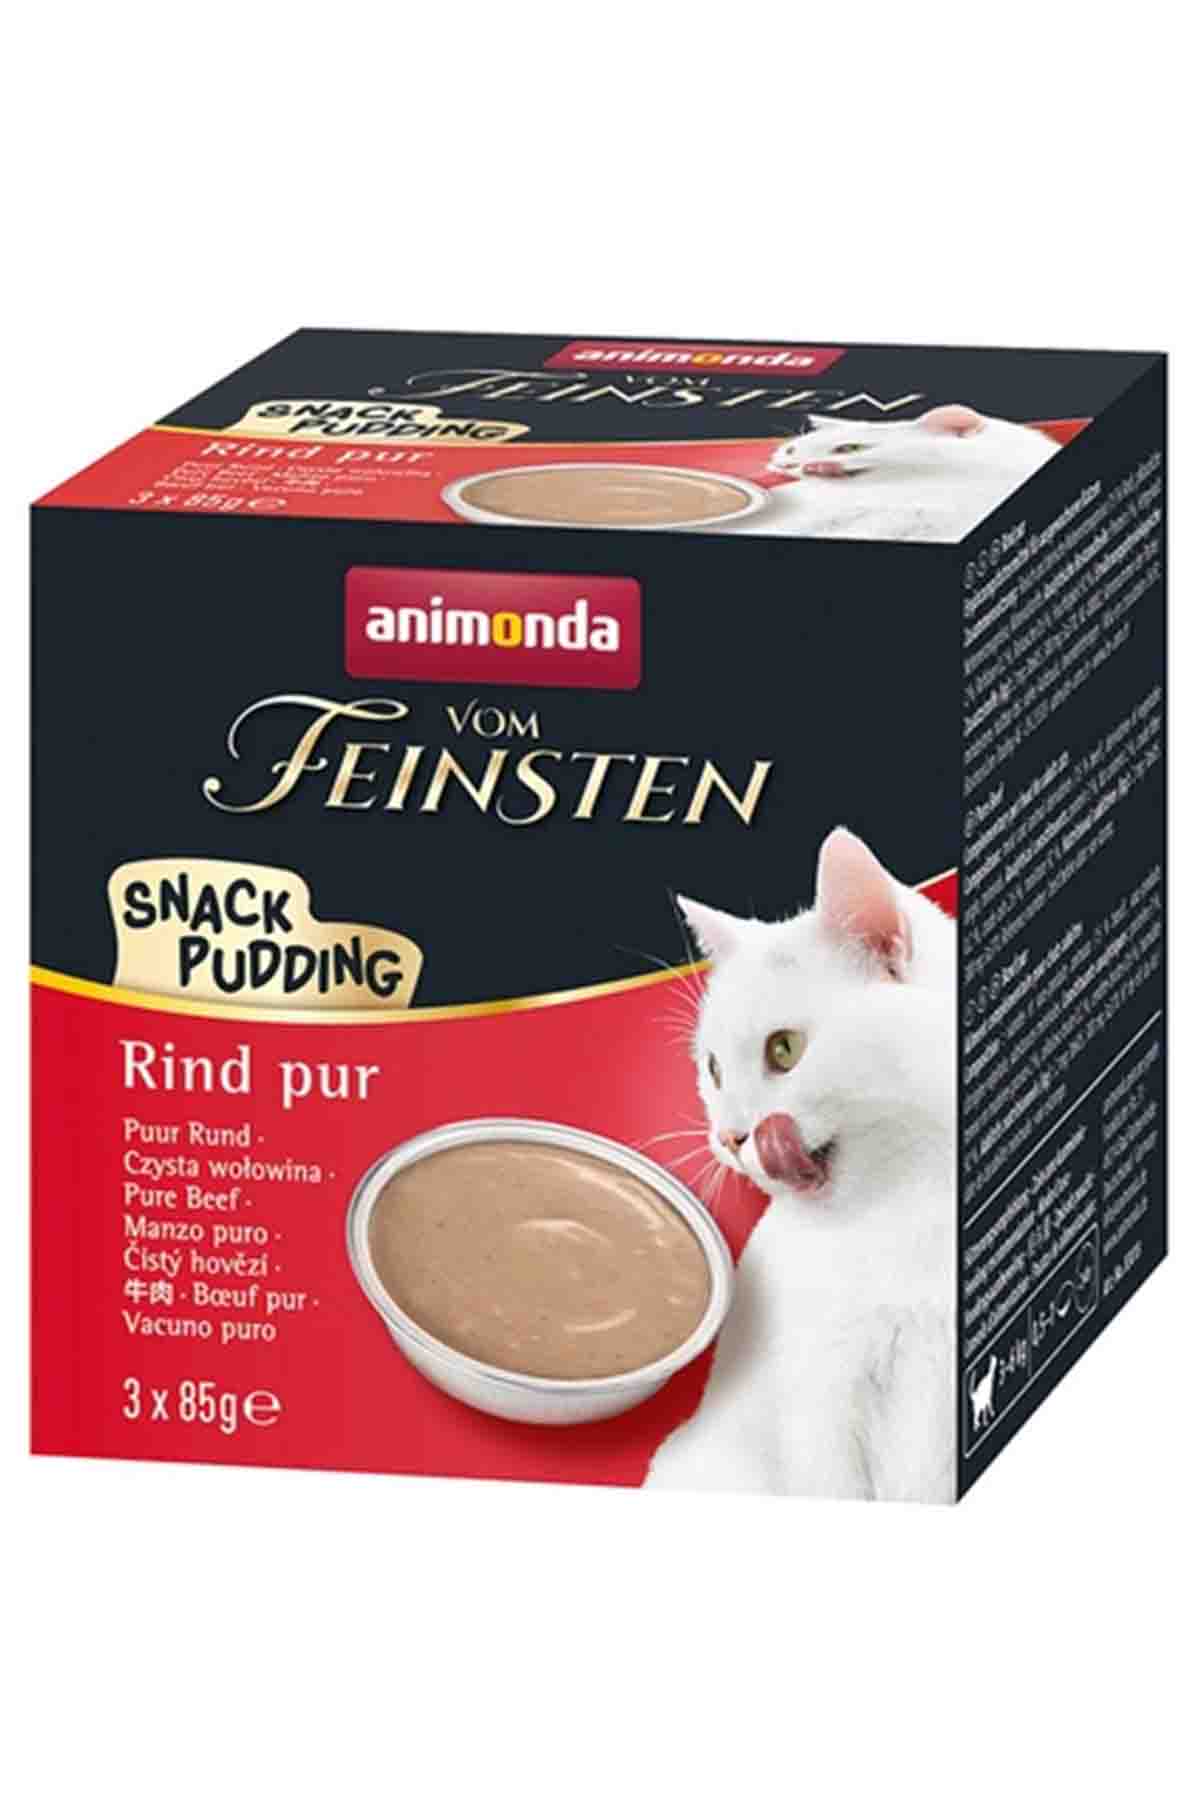 Animonda Vom Feinsten Snack Pudding Biftekli 3x85g